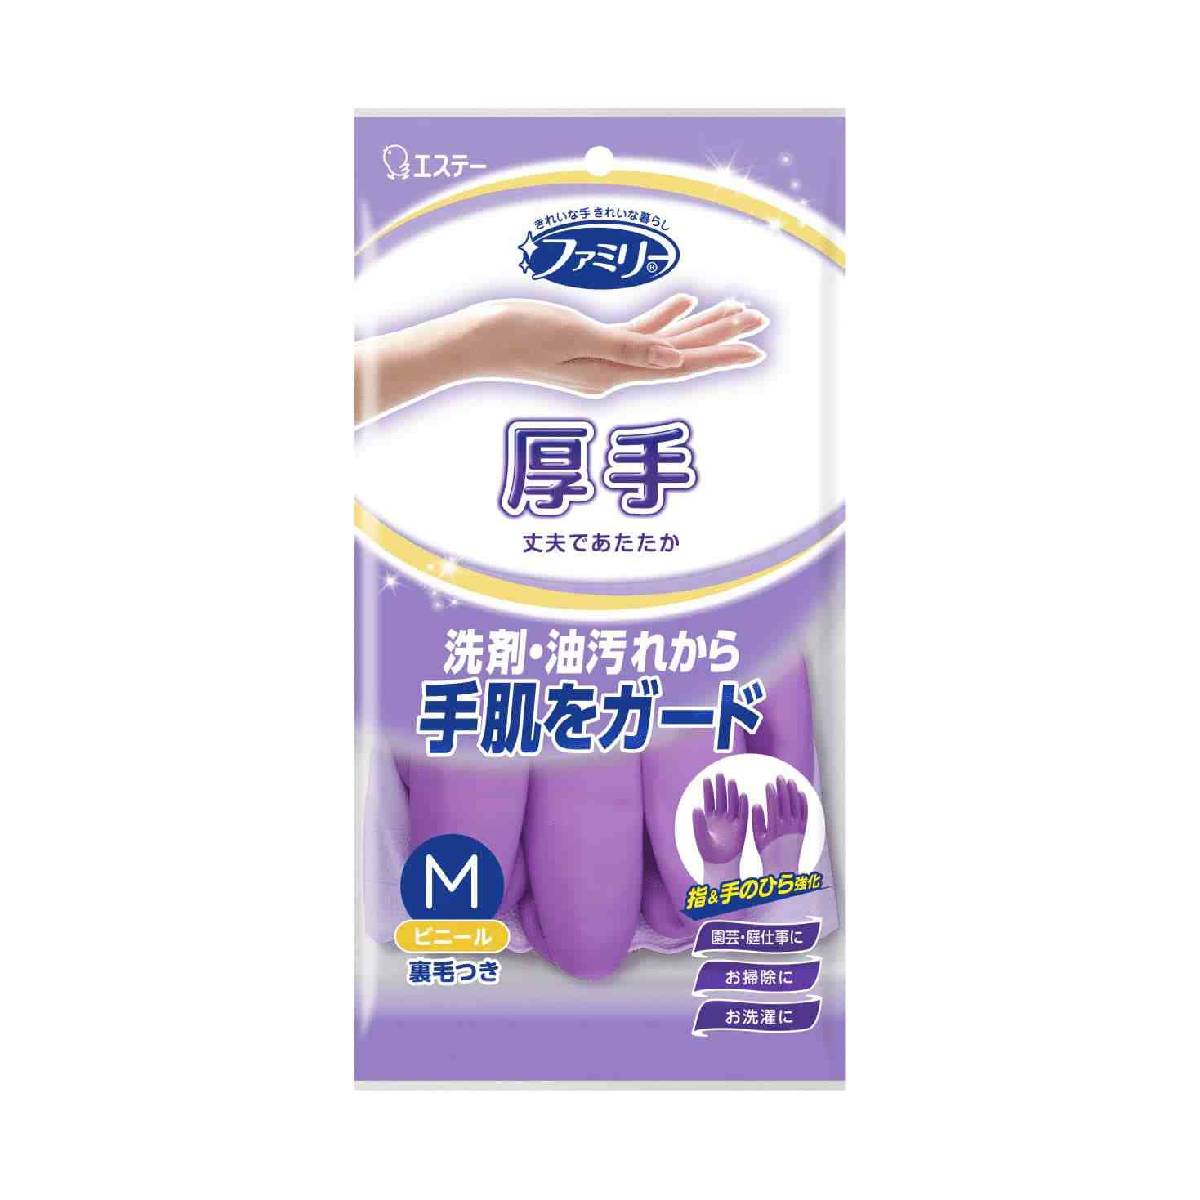 Kitchen Gloves Taiwan (2 Pairs) (Japan Edition)